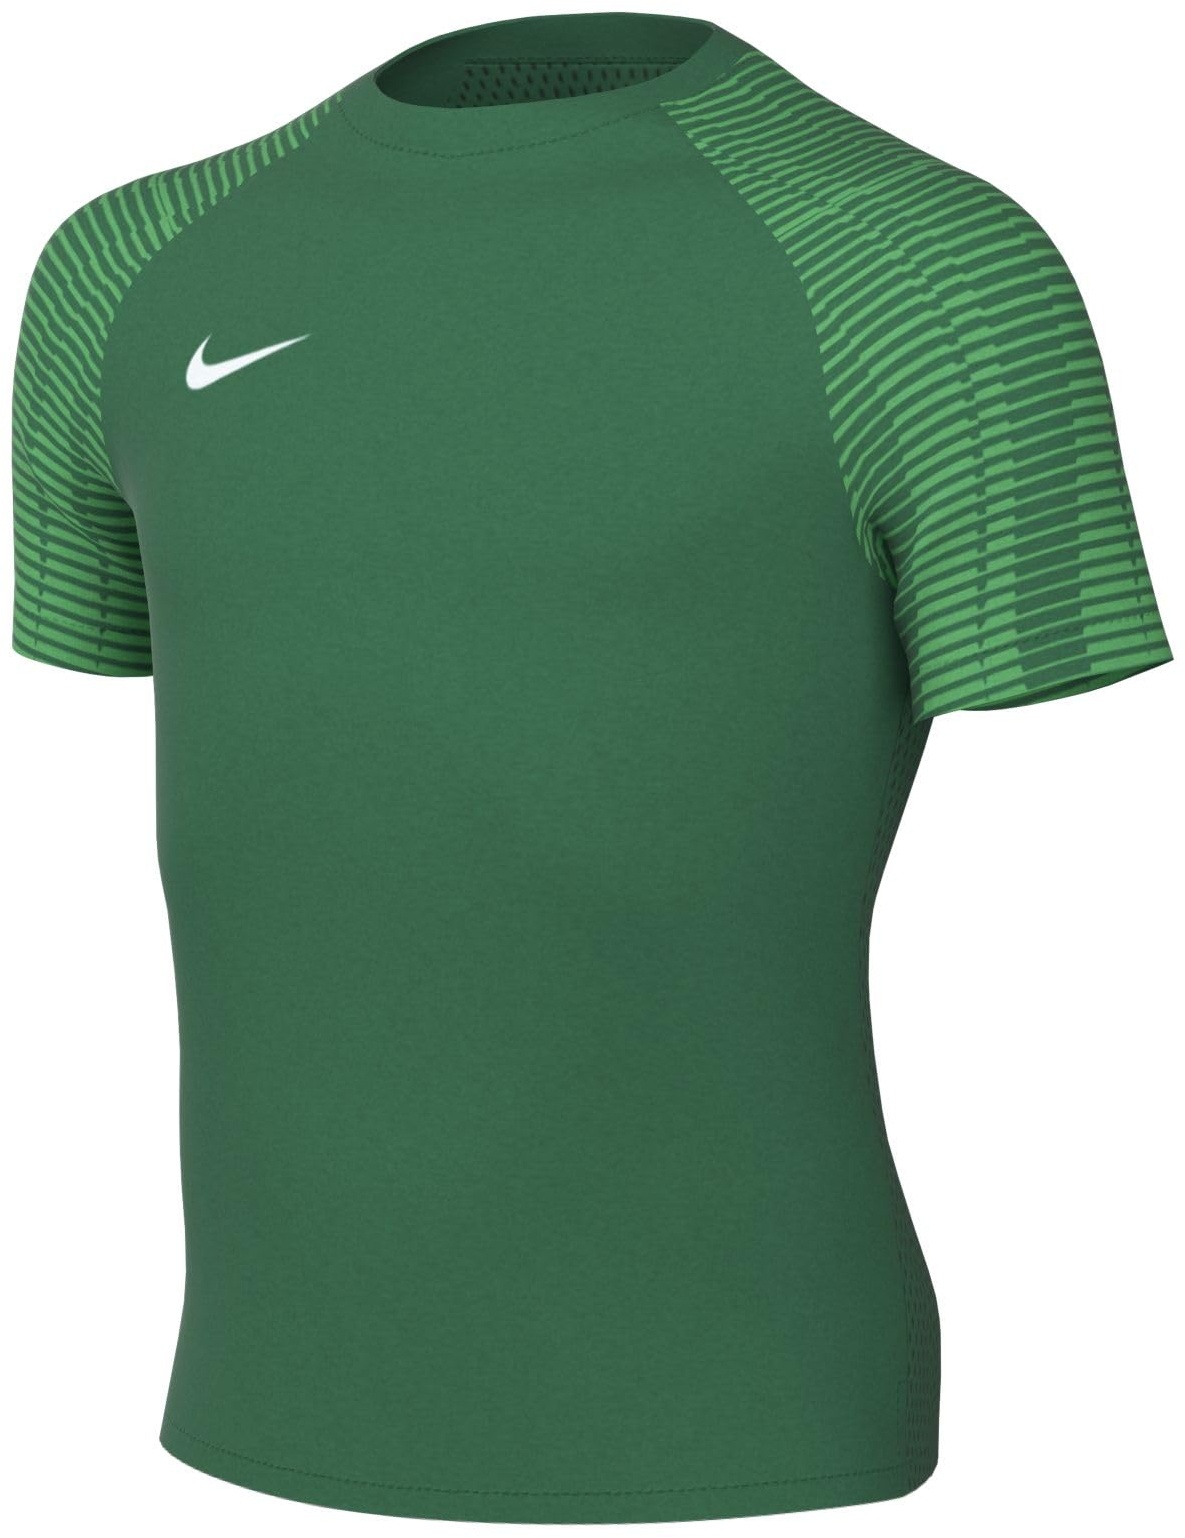 Nike, Dri-Fit Academy, Kurzarm-Fußball-Trikot, Kiefer Grün/Hyper Verde/Weiß, L, Junge